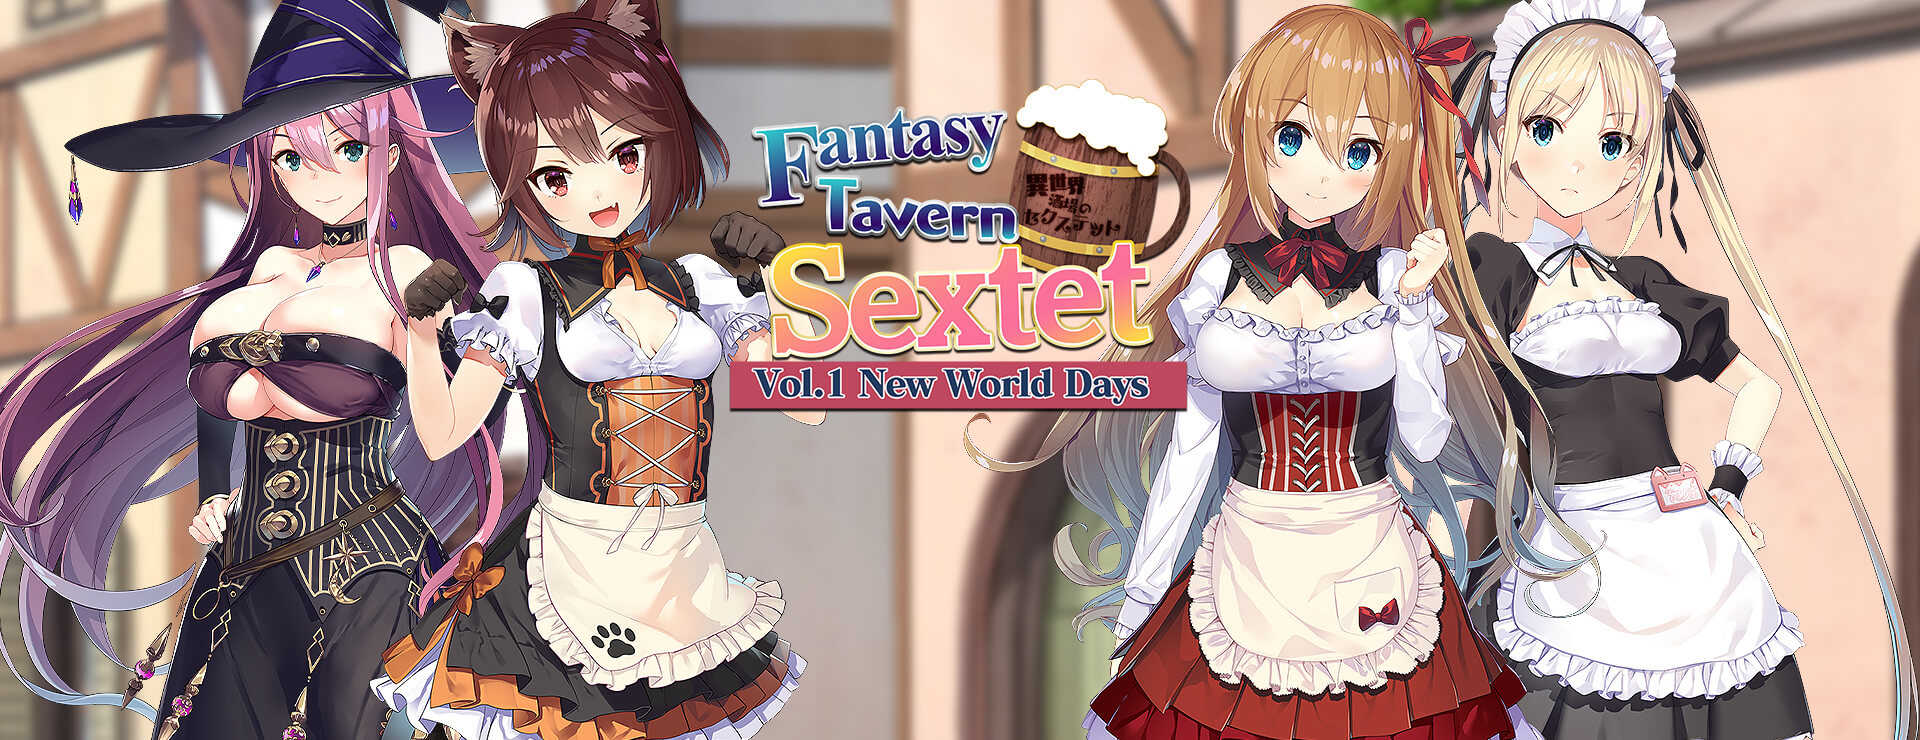 Fantasy Tavern Sextet - Vol.1 New World Days - Visual Novel Game